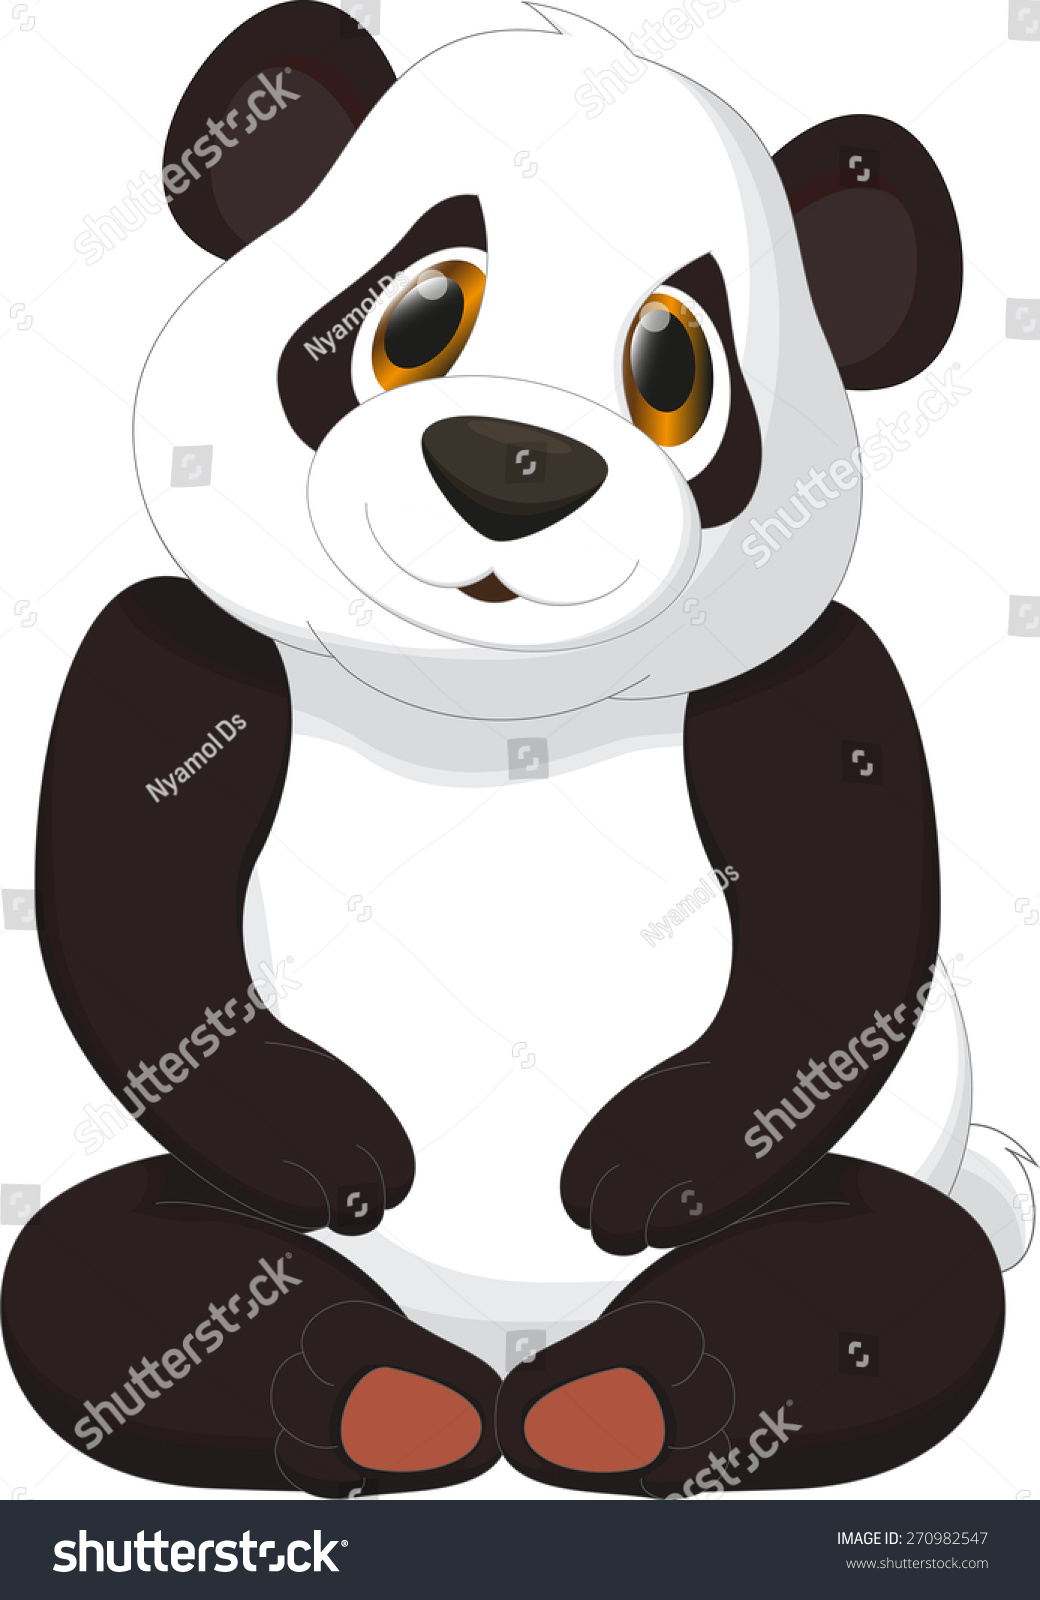 Cute Panda Cartoon Stock Vector Illustration 270982547 : Shutterstock